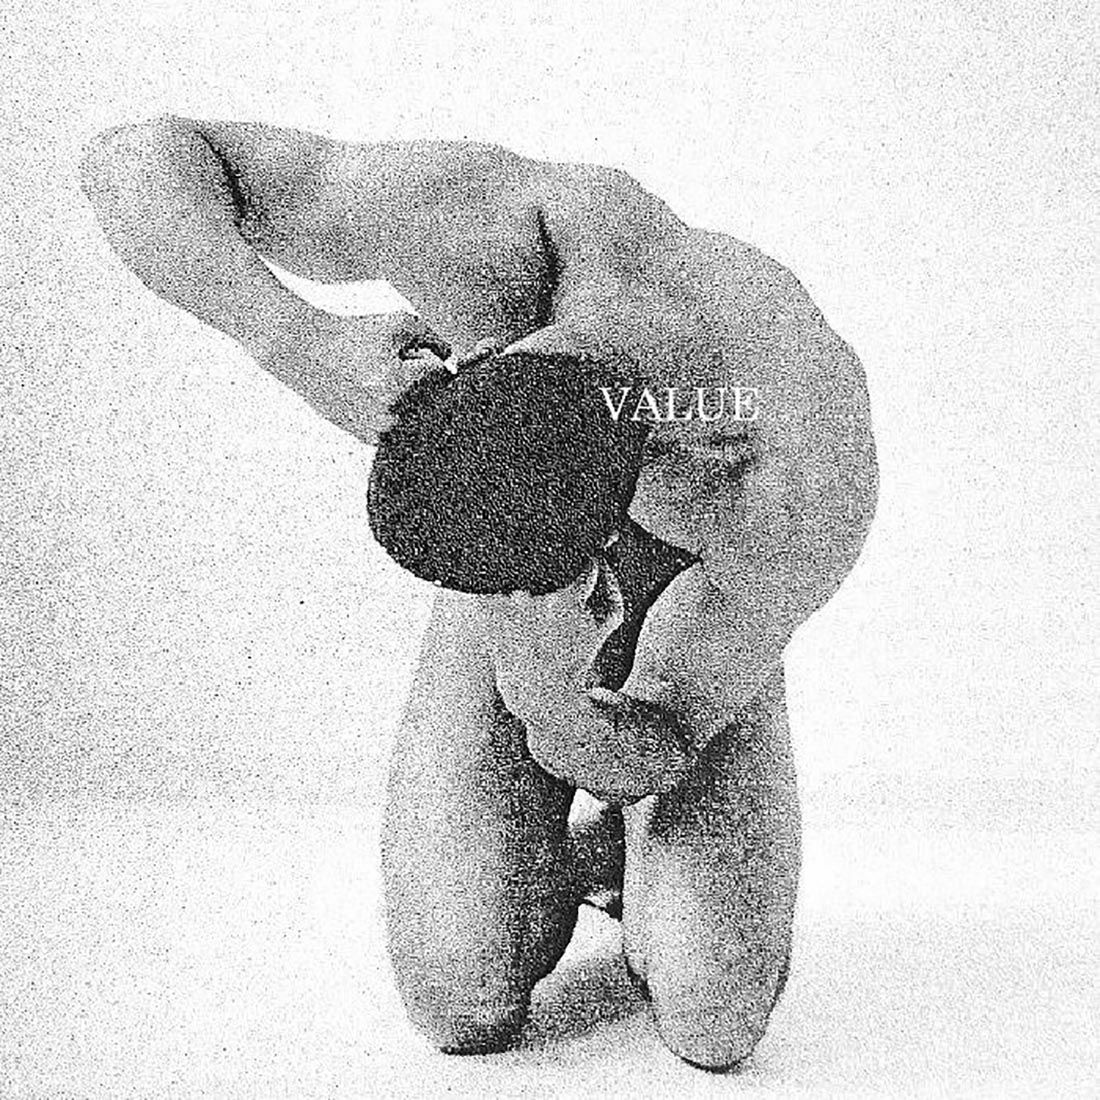 Value: Vinyl LP